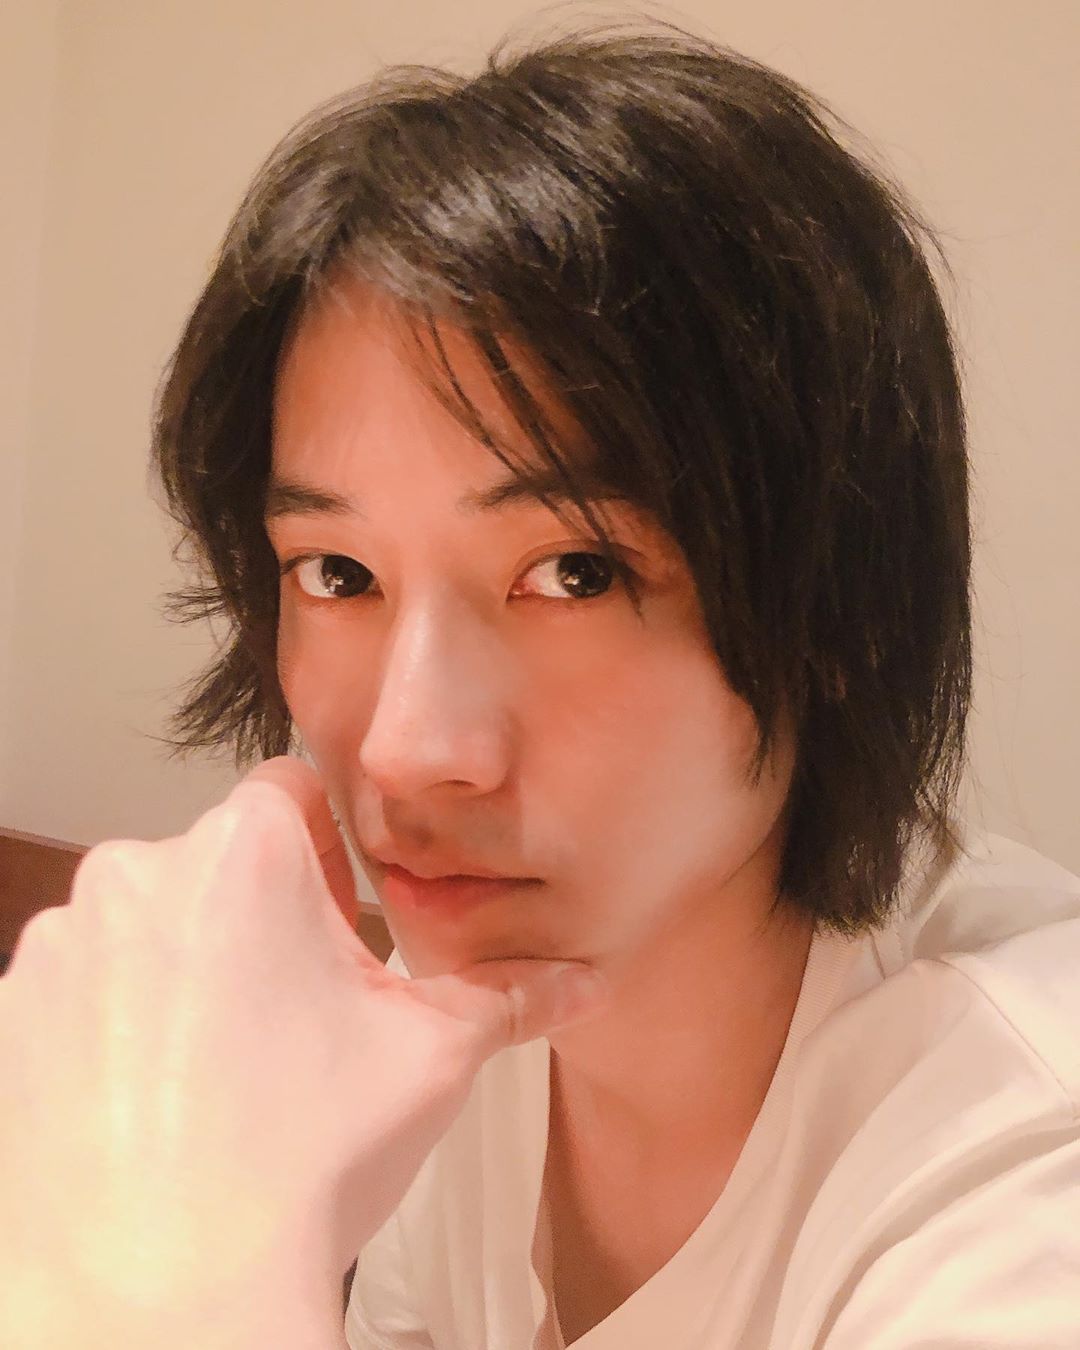 Kento’s MG Instagram post on 7 September, 2020 – yamazaki-kento.com